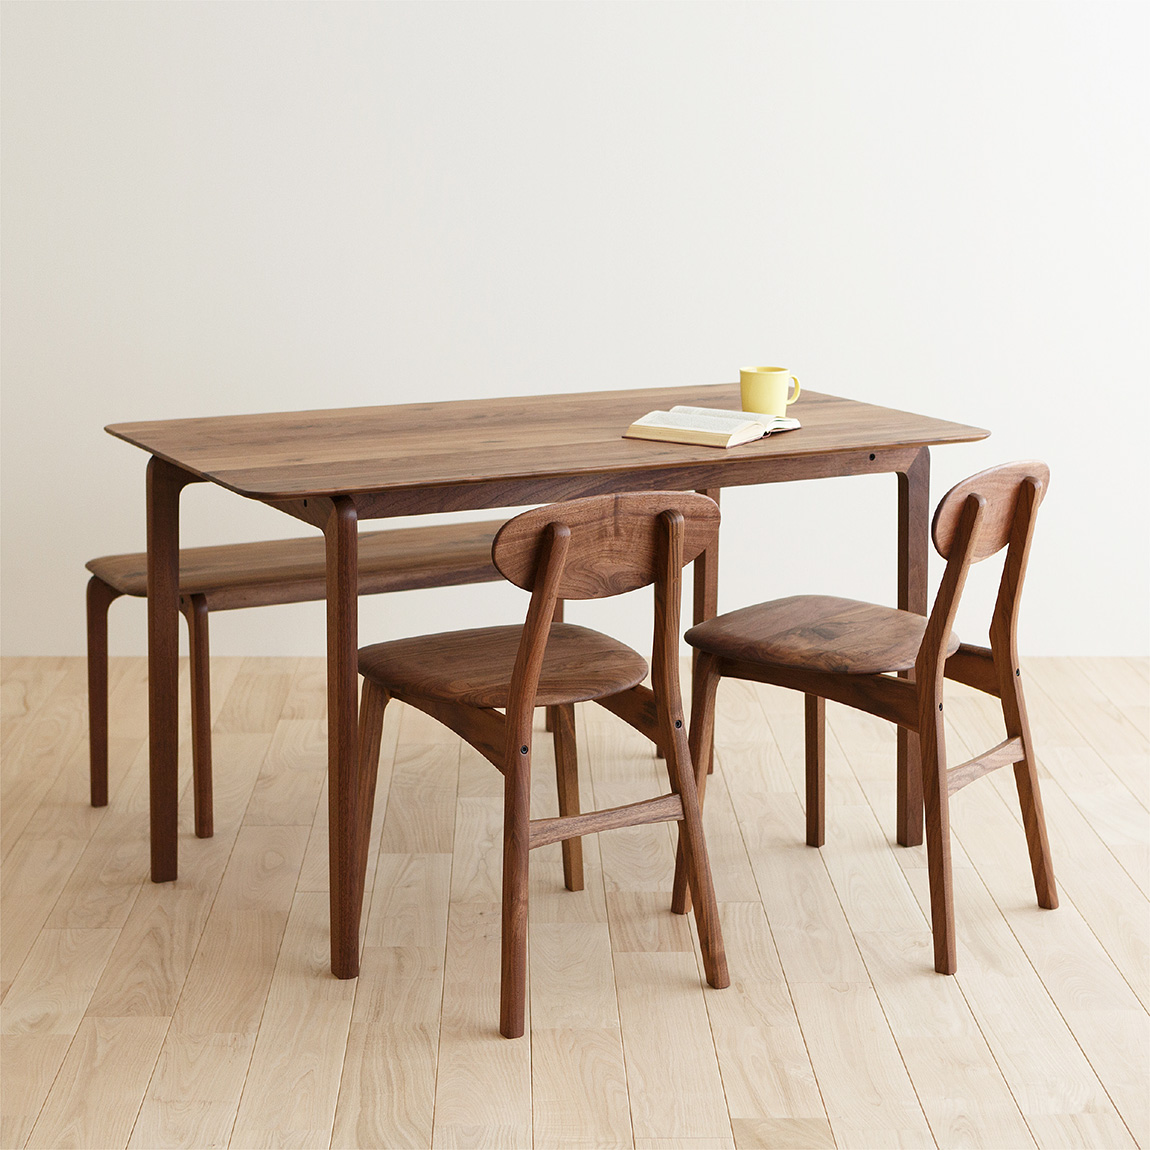 LISCIO Dining Table 126*70, Side Chair, Bench 105 / walnut